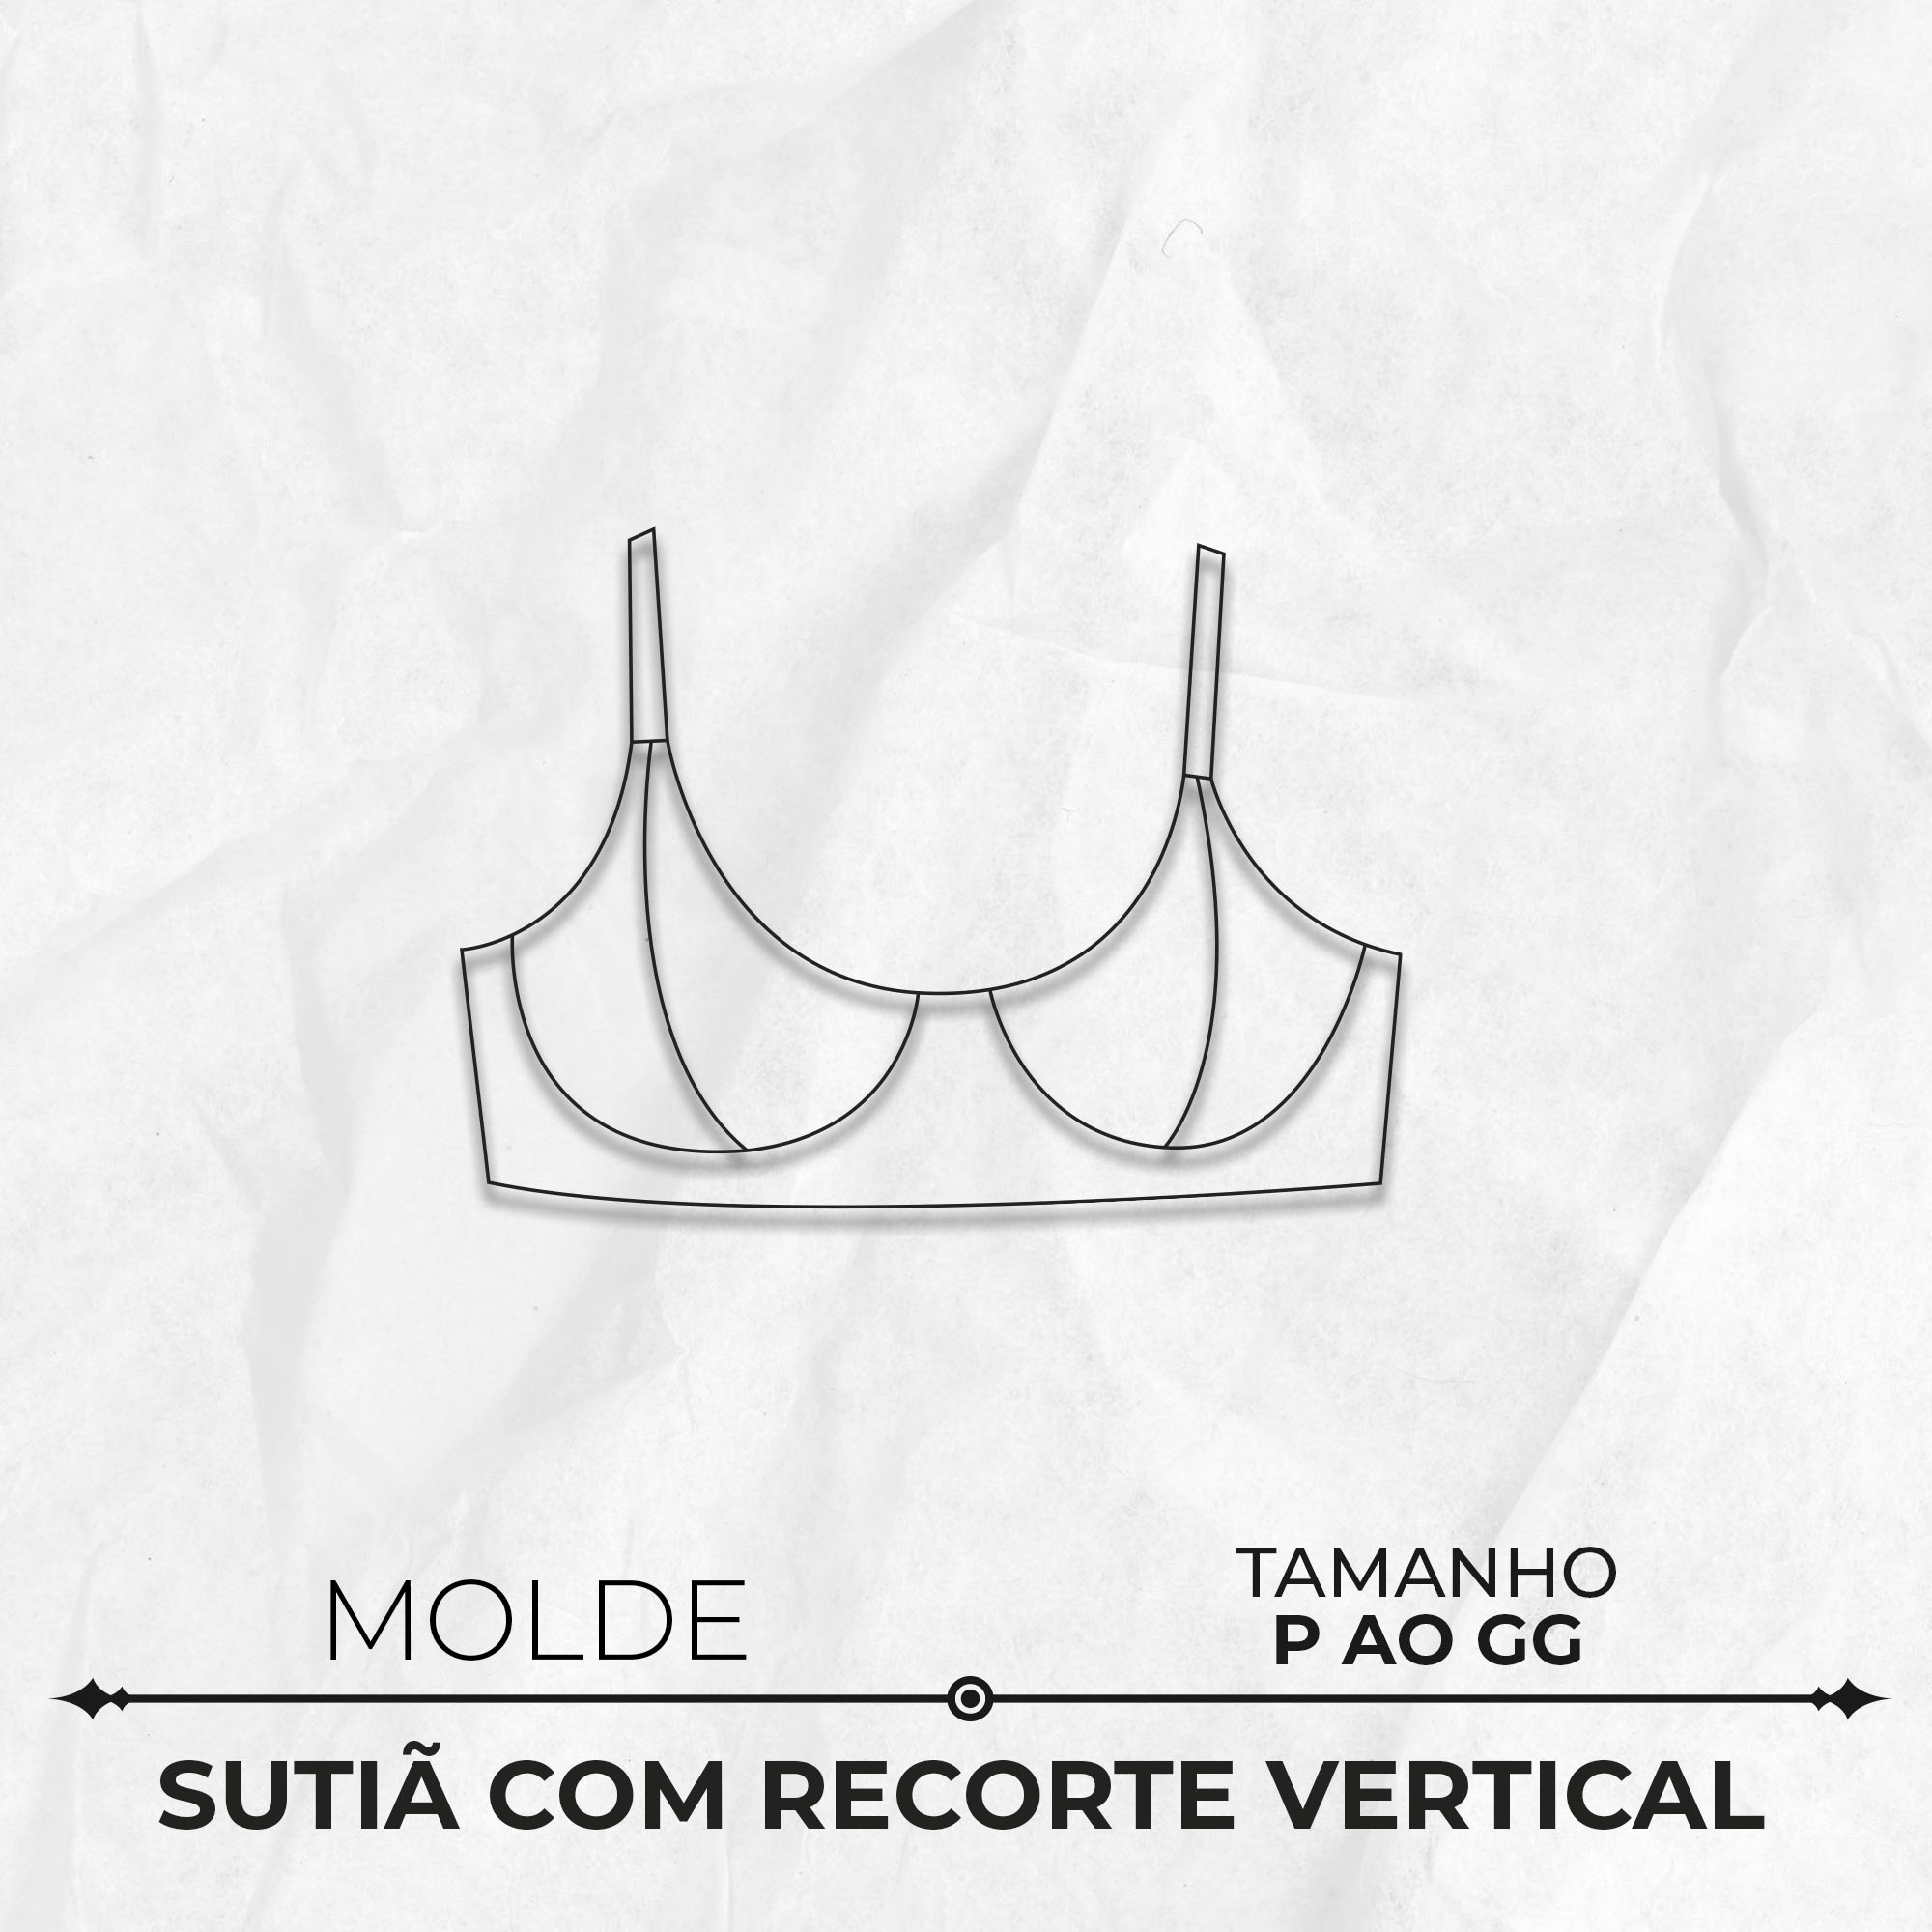 Molde lingerie sutiã com recorte vertical by Marlene Mukai